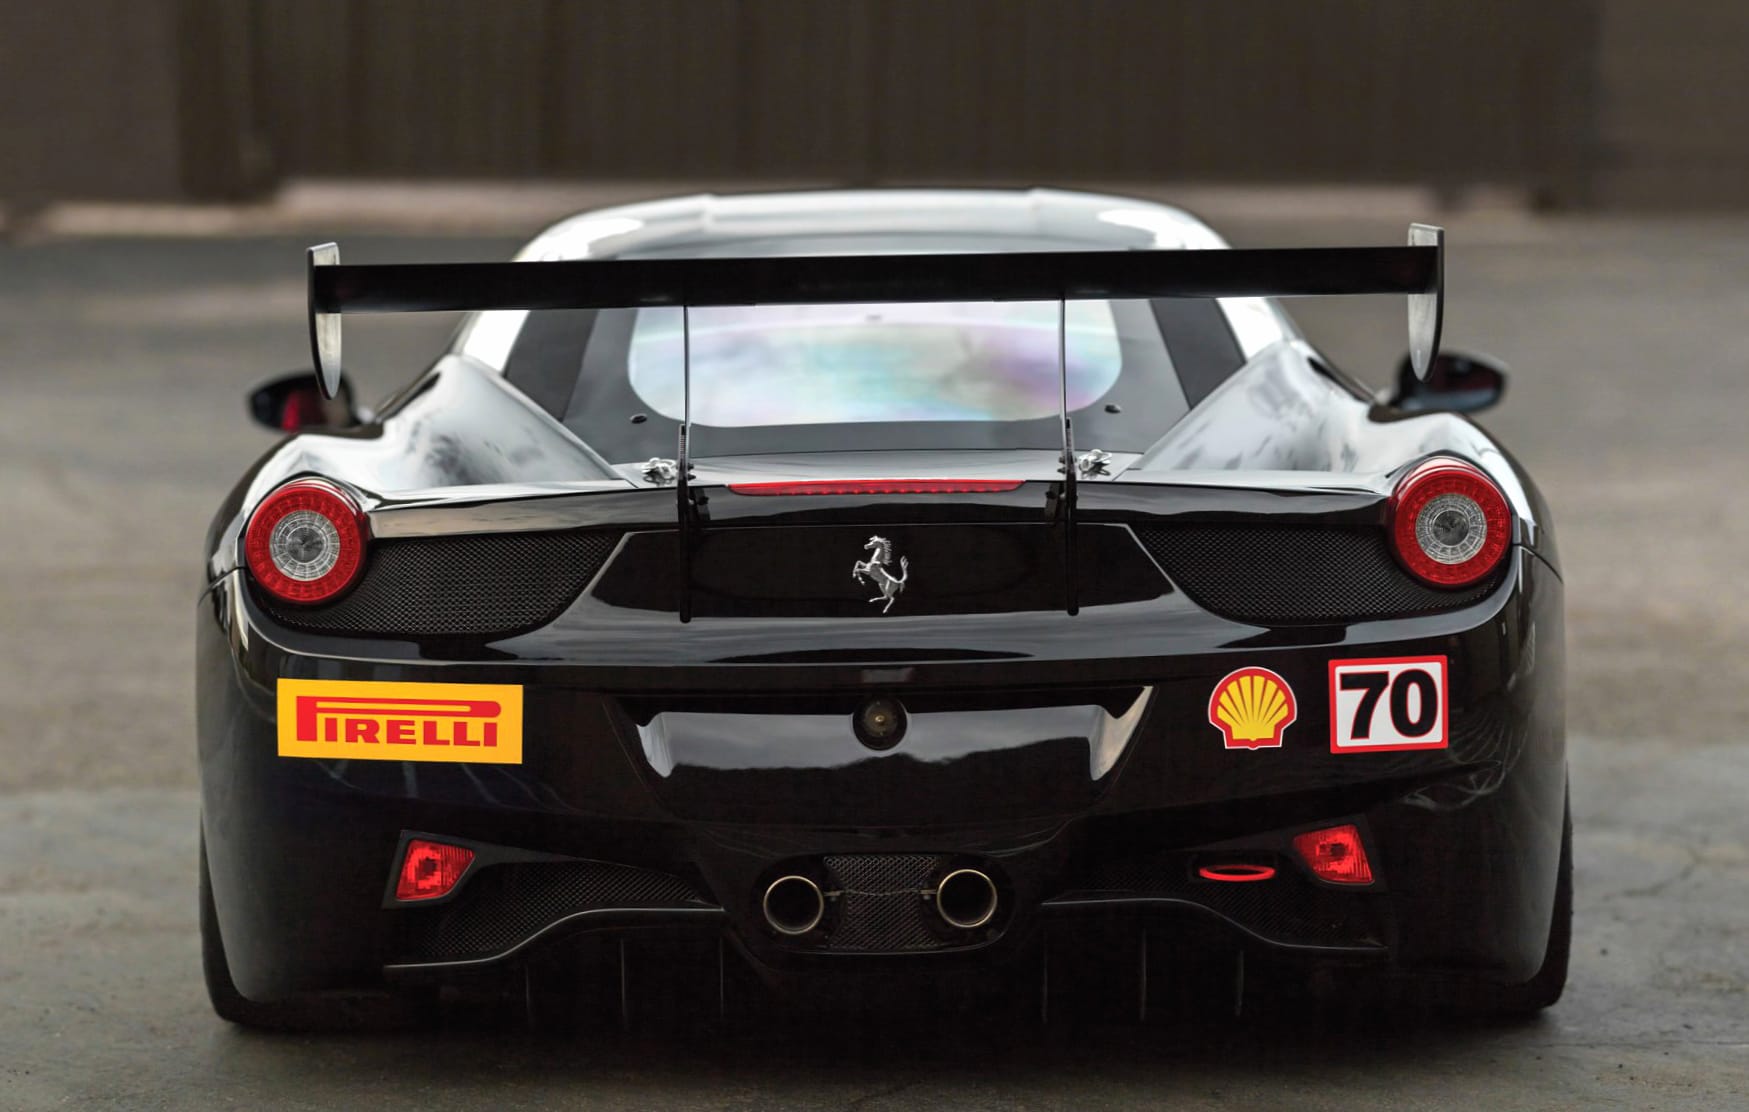 Ferrari 458 Challenge Evoluzione at 320 x 480 iPhone size wallpapers HD quality